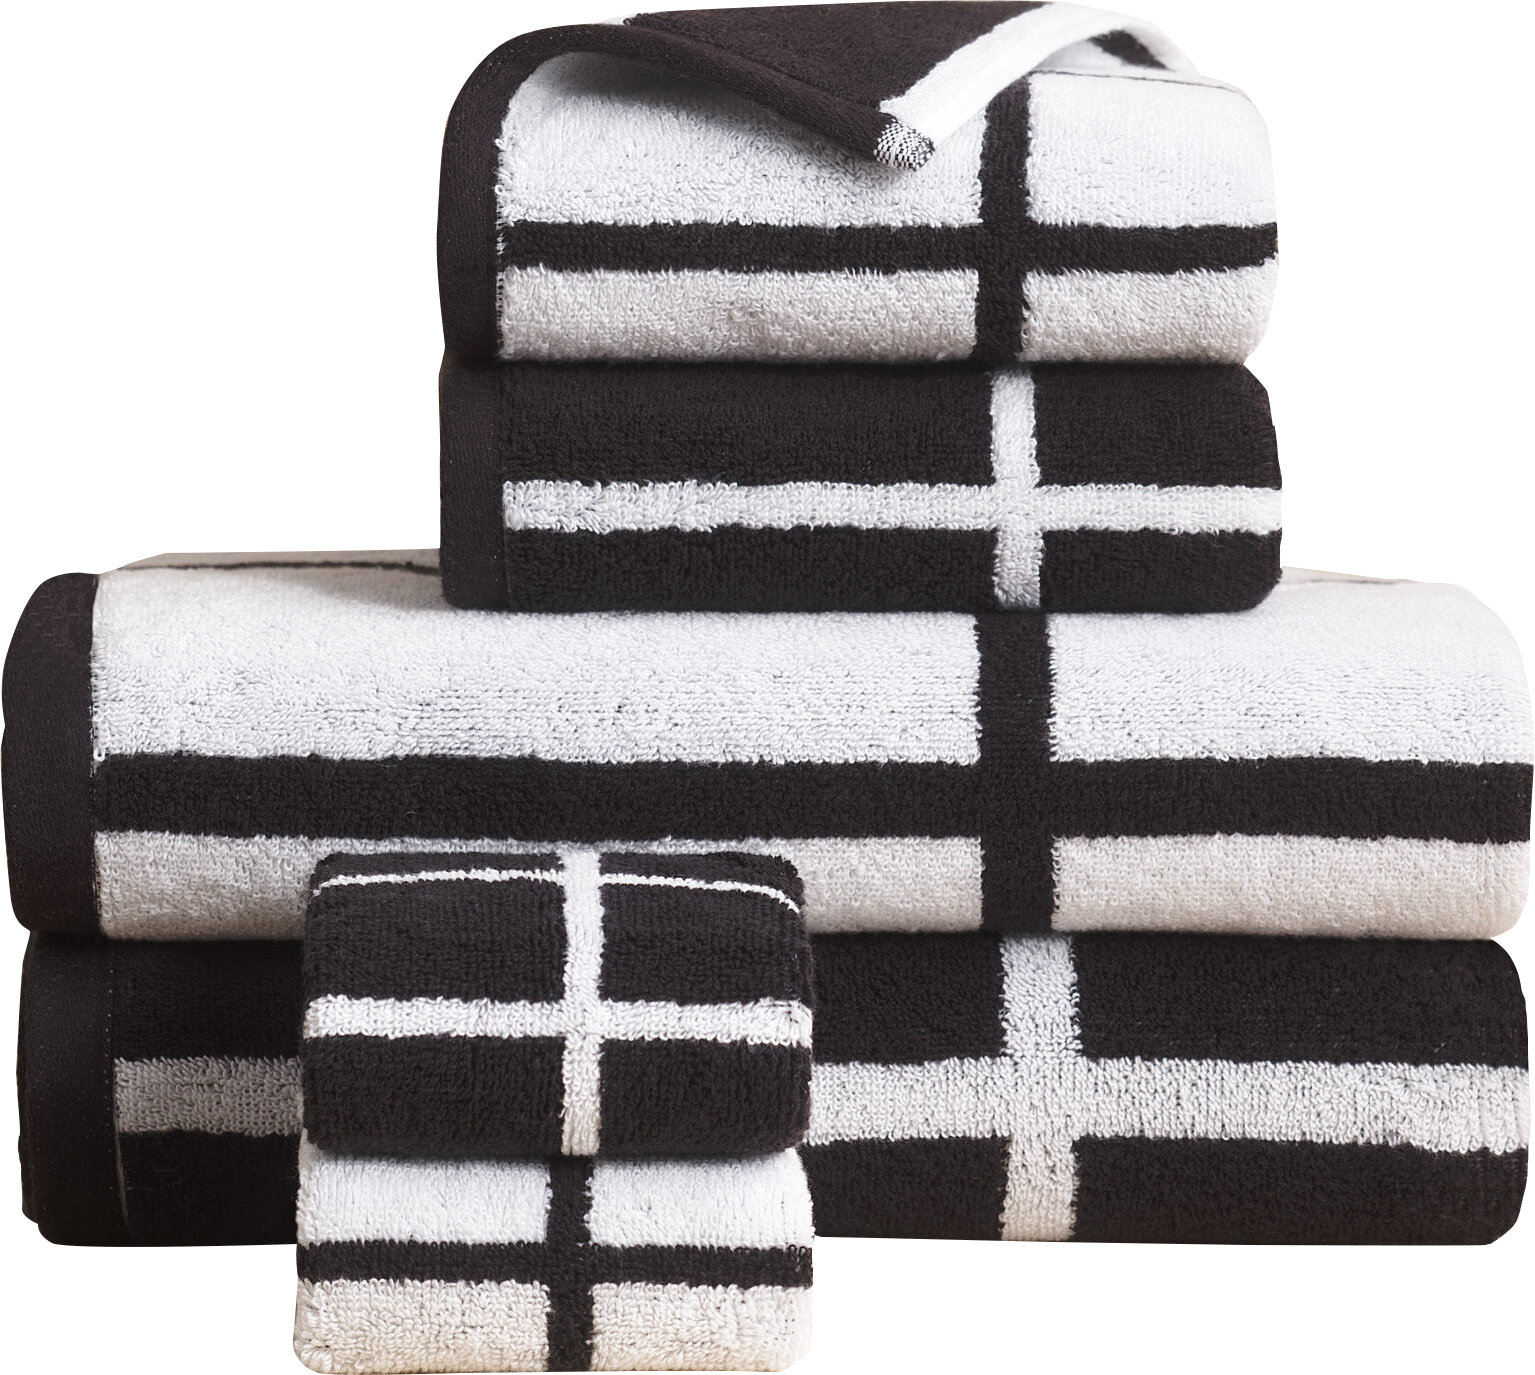 black and white towels asda